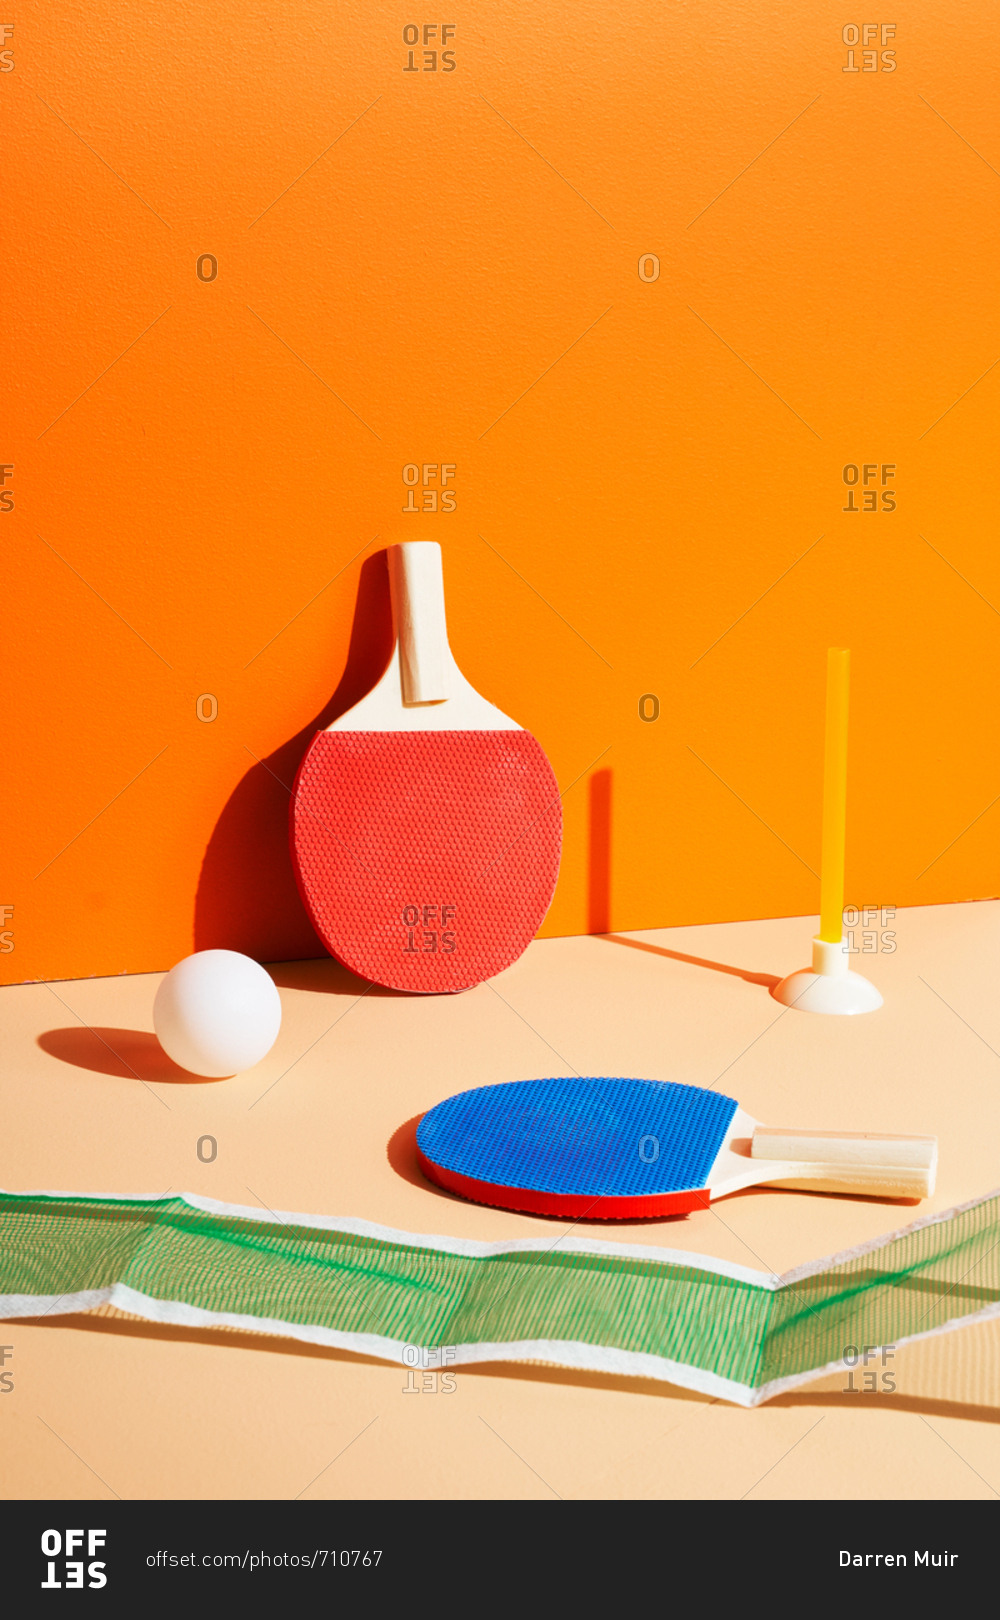 Ping pong set on orange background